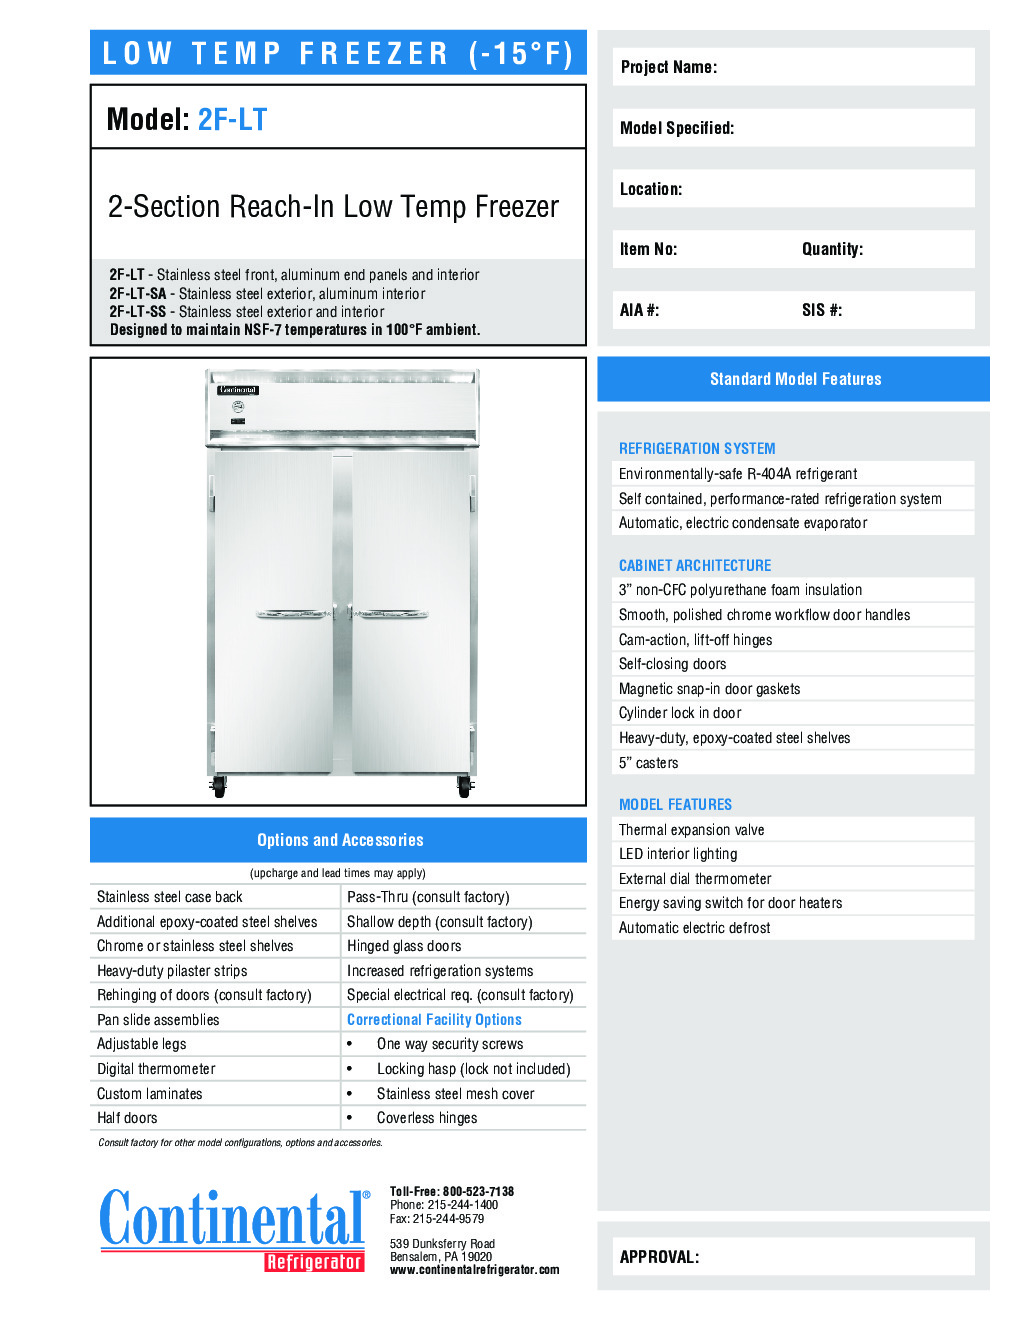 Continental Refrigerator 2F-LT-SA Reach-In Low Temperature Freezer